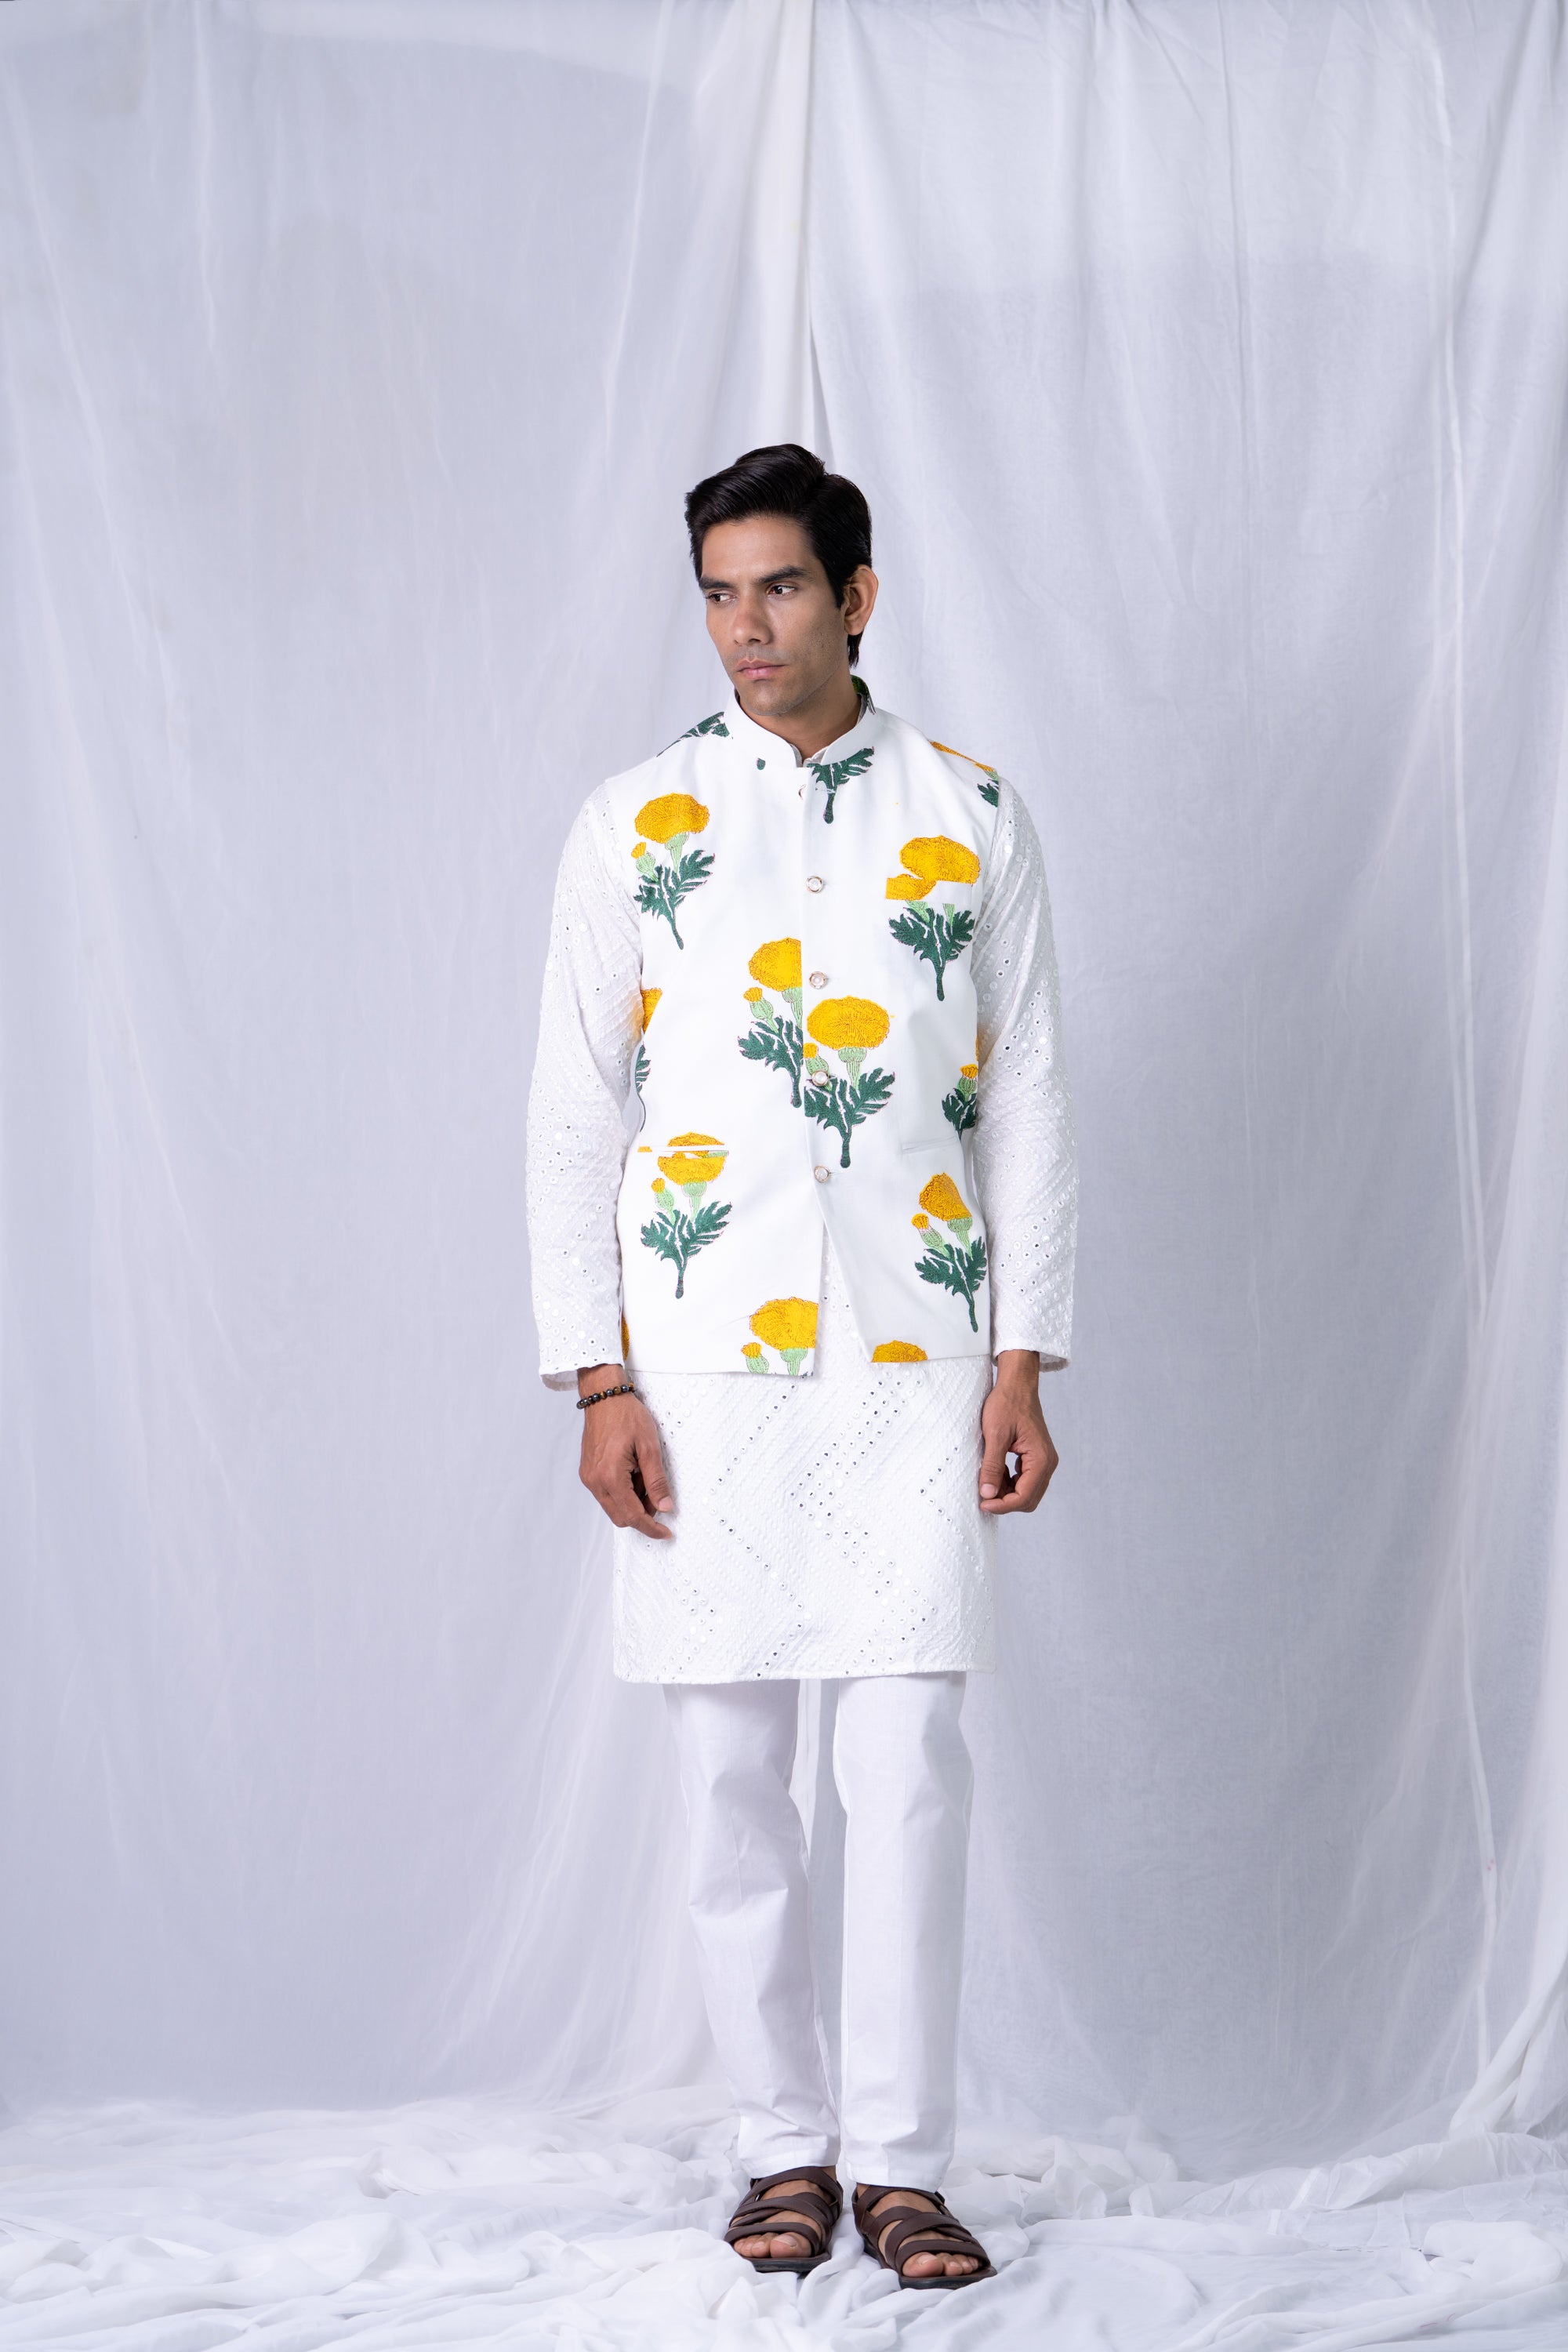 Firangi Yarn Cotton Block Printed Nehru Jacket Yellow Marigold For Haldi, Sangeet, Wedding, Diwali and More